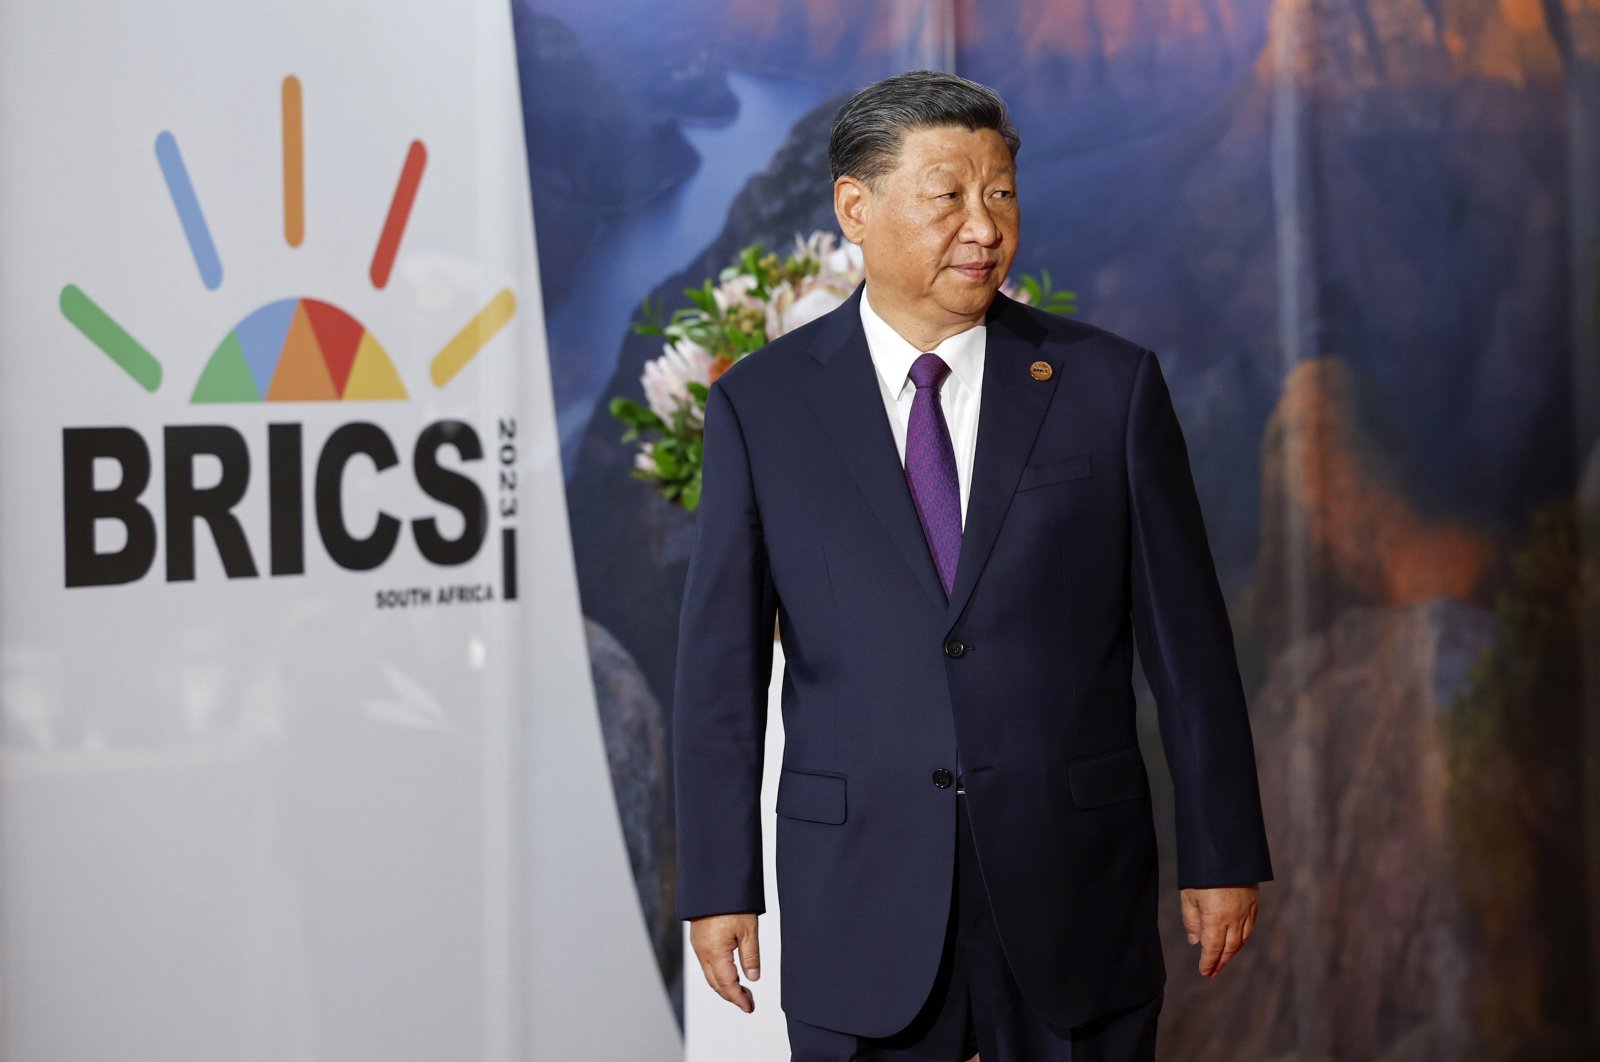 Hegemony not in China’s DNA, Xi tells BRICS amid expansion push